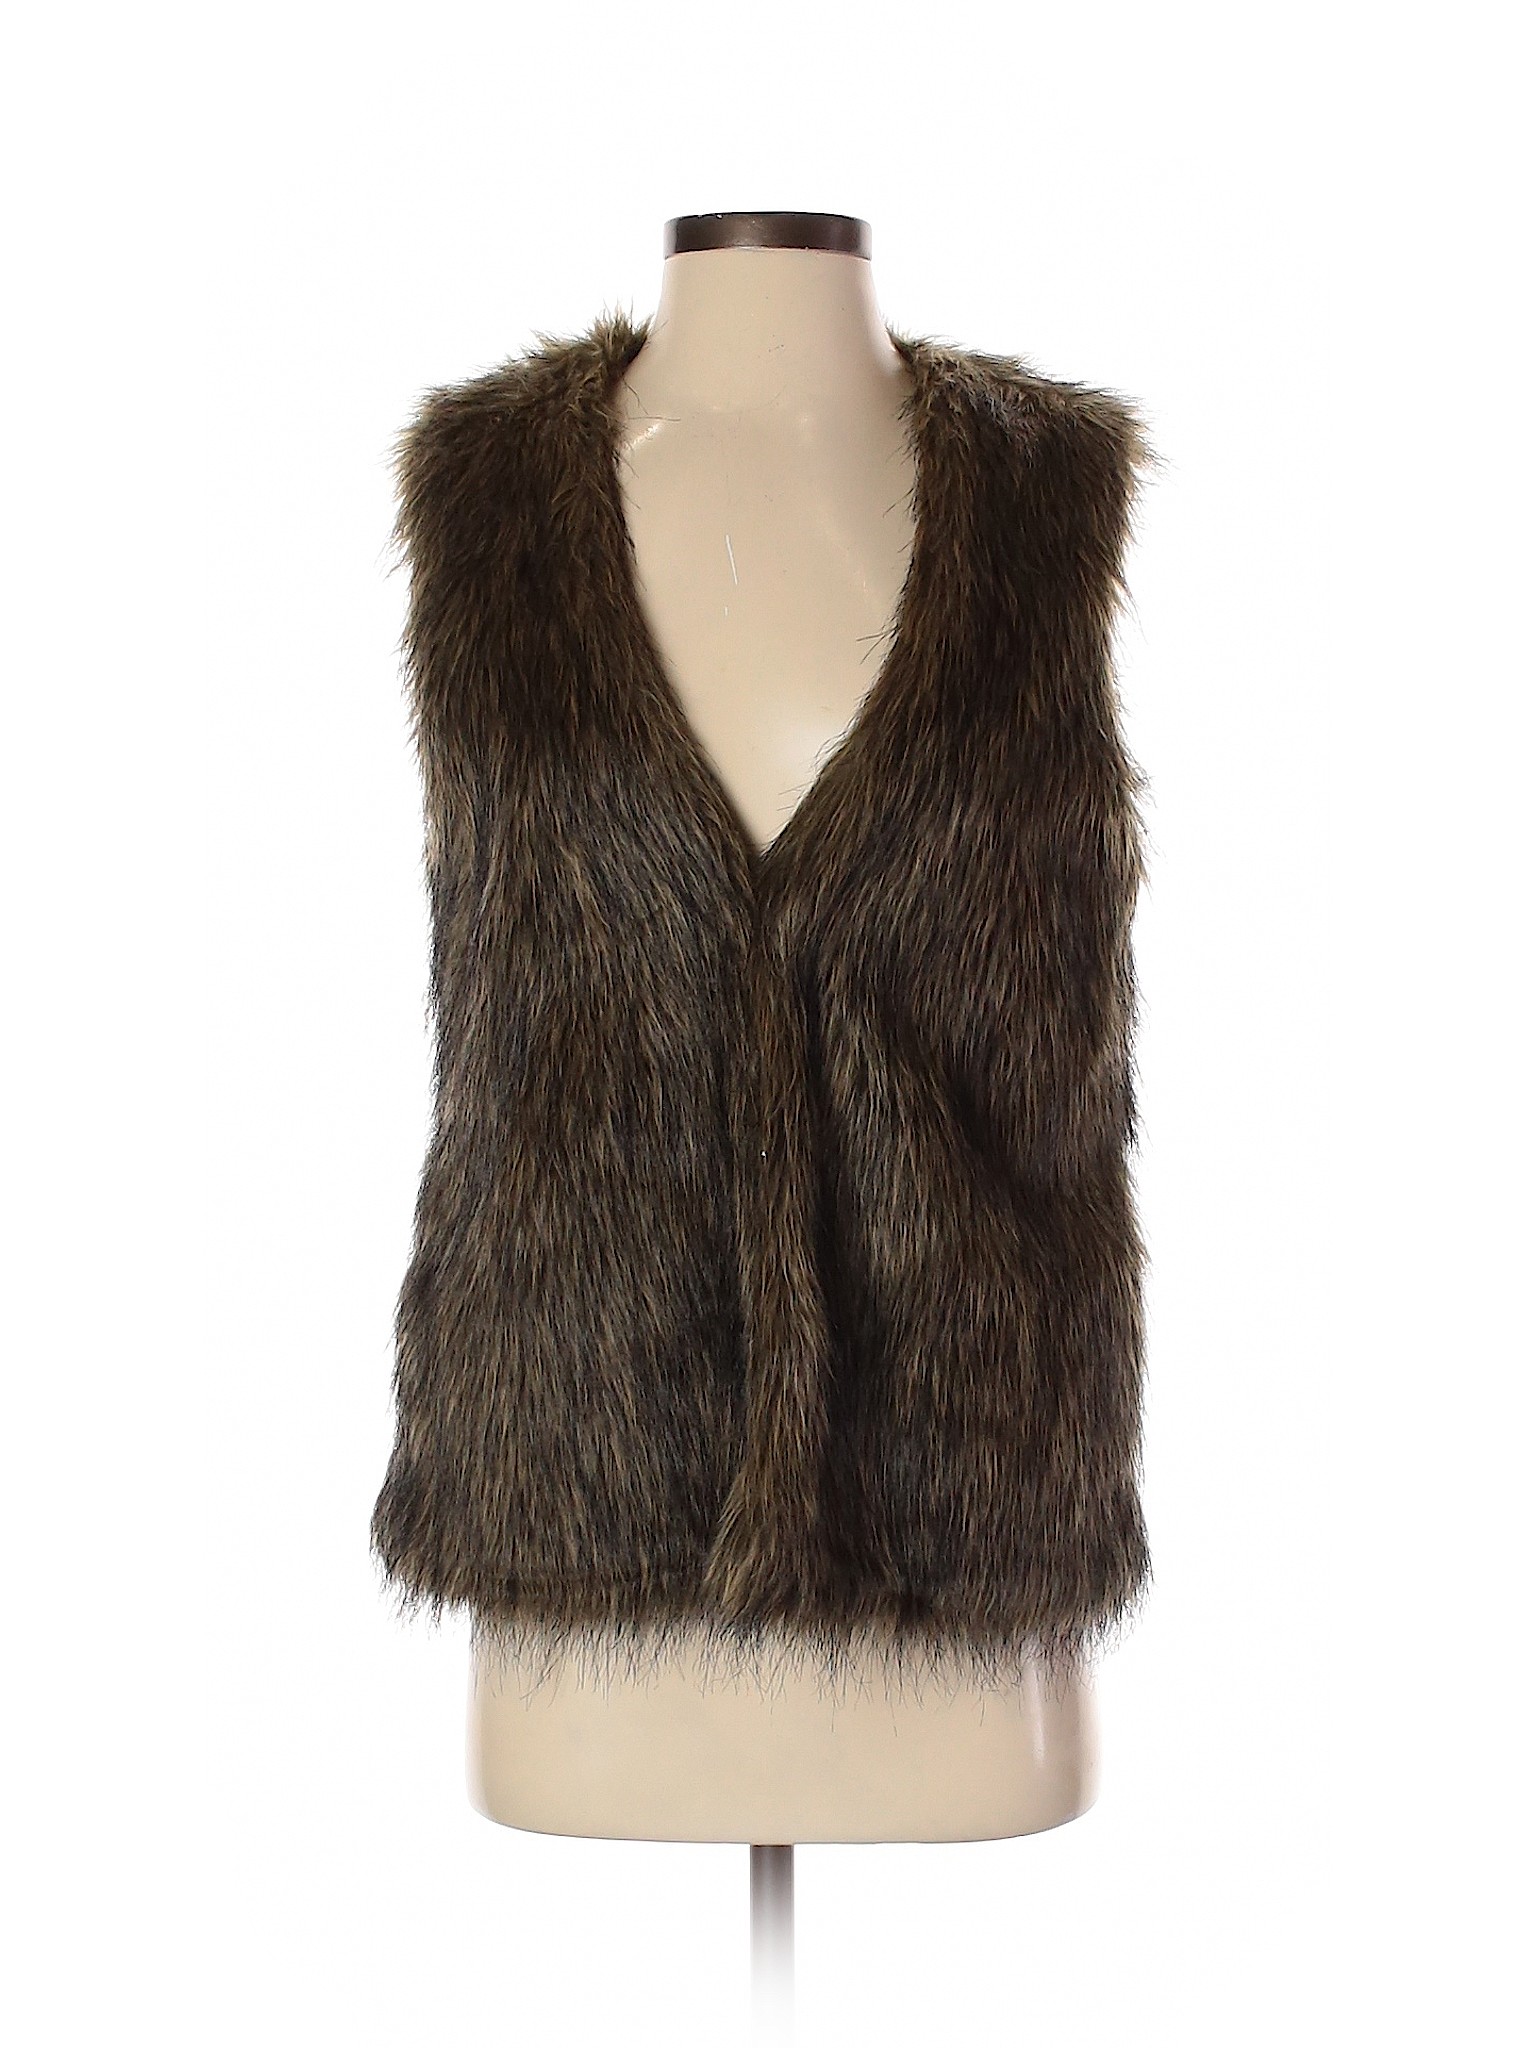 JACK Women Brown Faux Fur Vest S | eBay